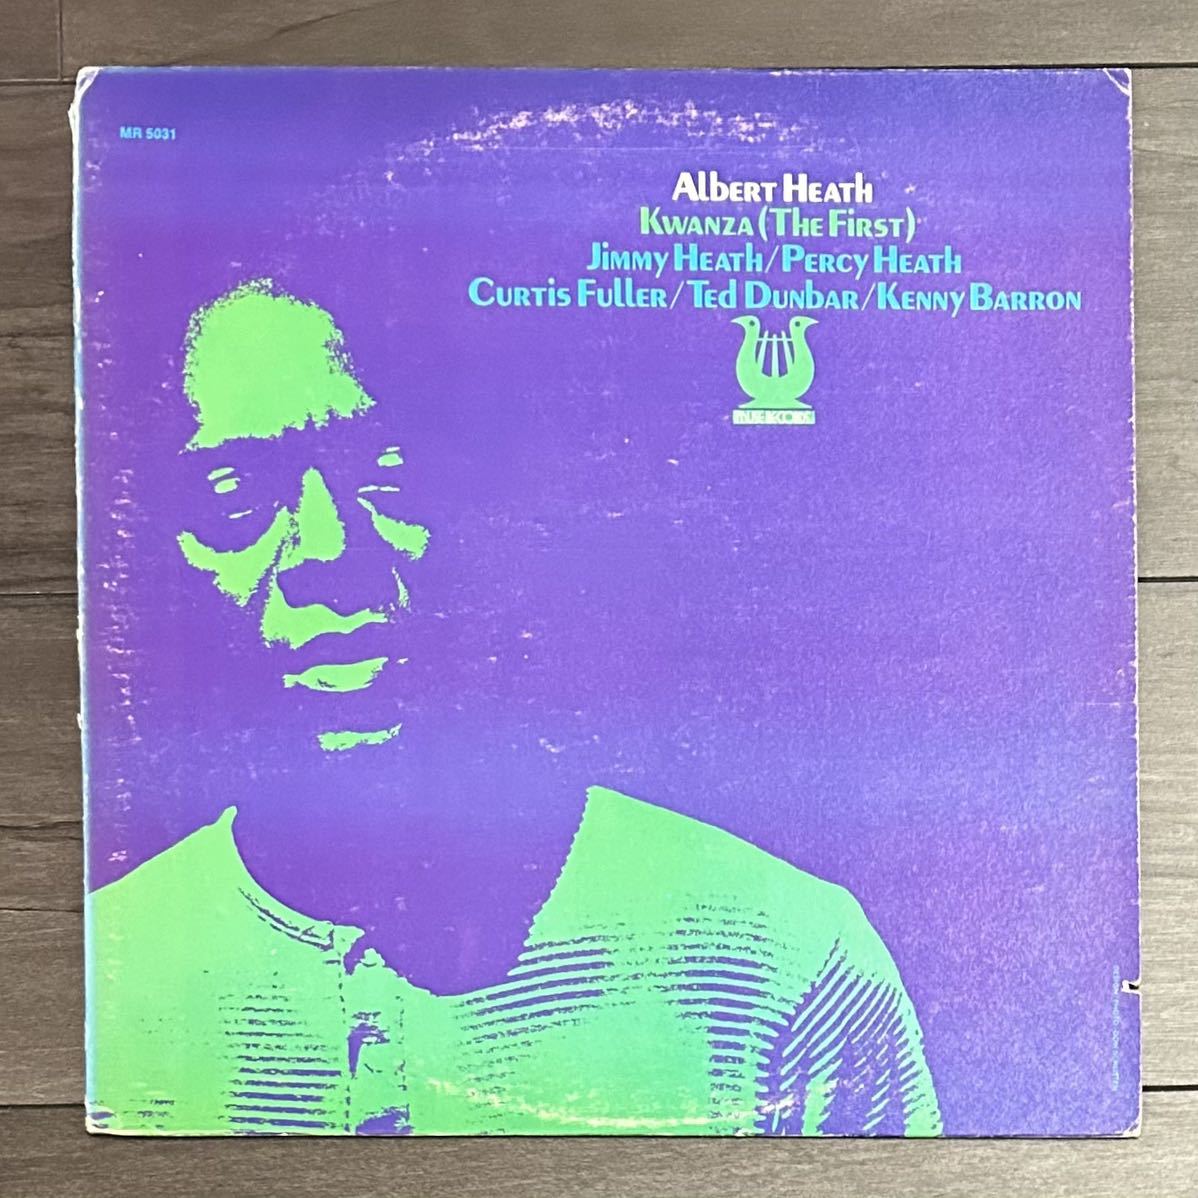 Albert Heath Kwanza (The First) MUSE US オリジナル盤 Spiritual Jazz Rare Groove レコード スピリチュアルジャズ strata east_画像1